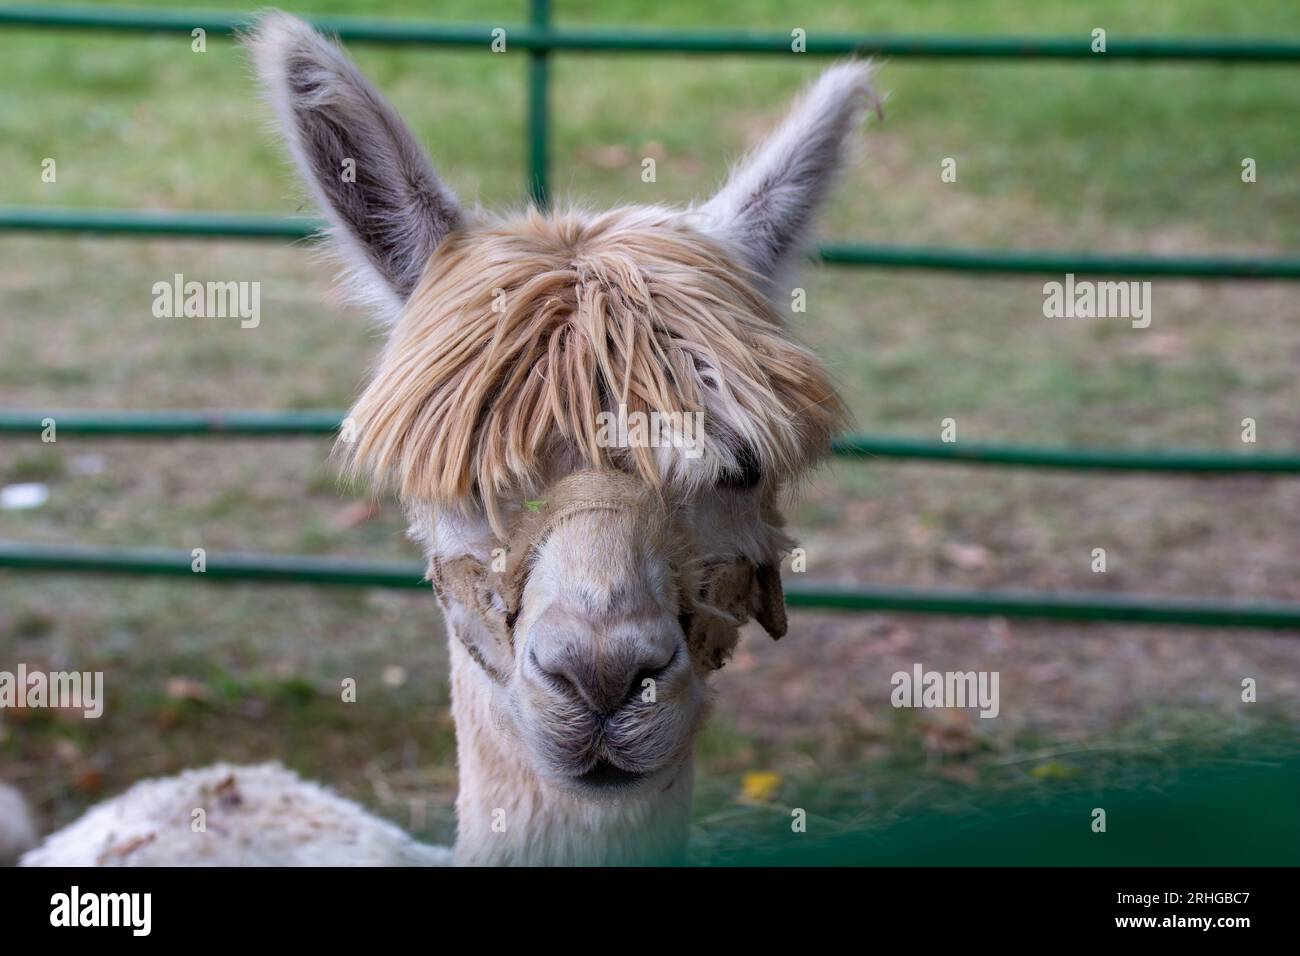 Close up headshot view of an alpaca (lama pacos) wearing a bridle, looking at the camera. Stock Photo